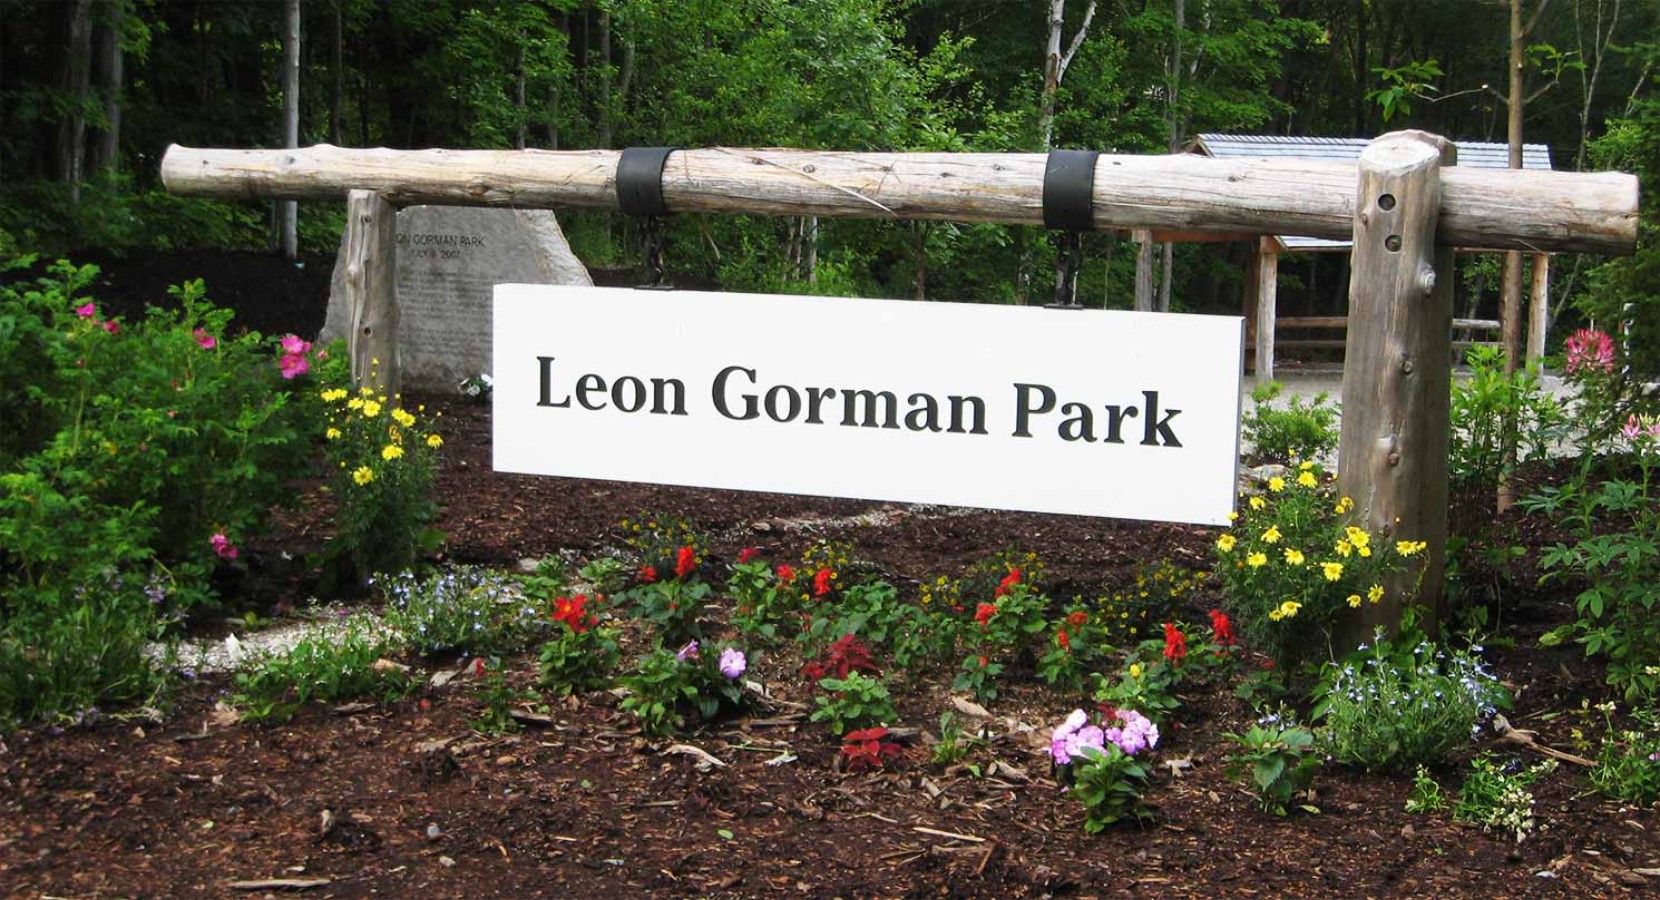 Entrance to the Leon Gorman Park.